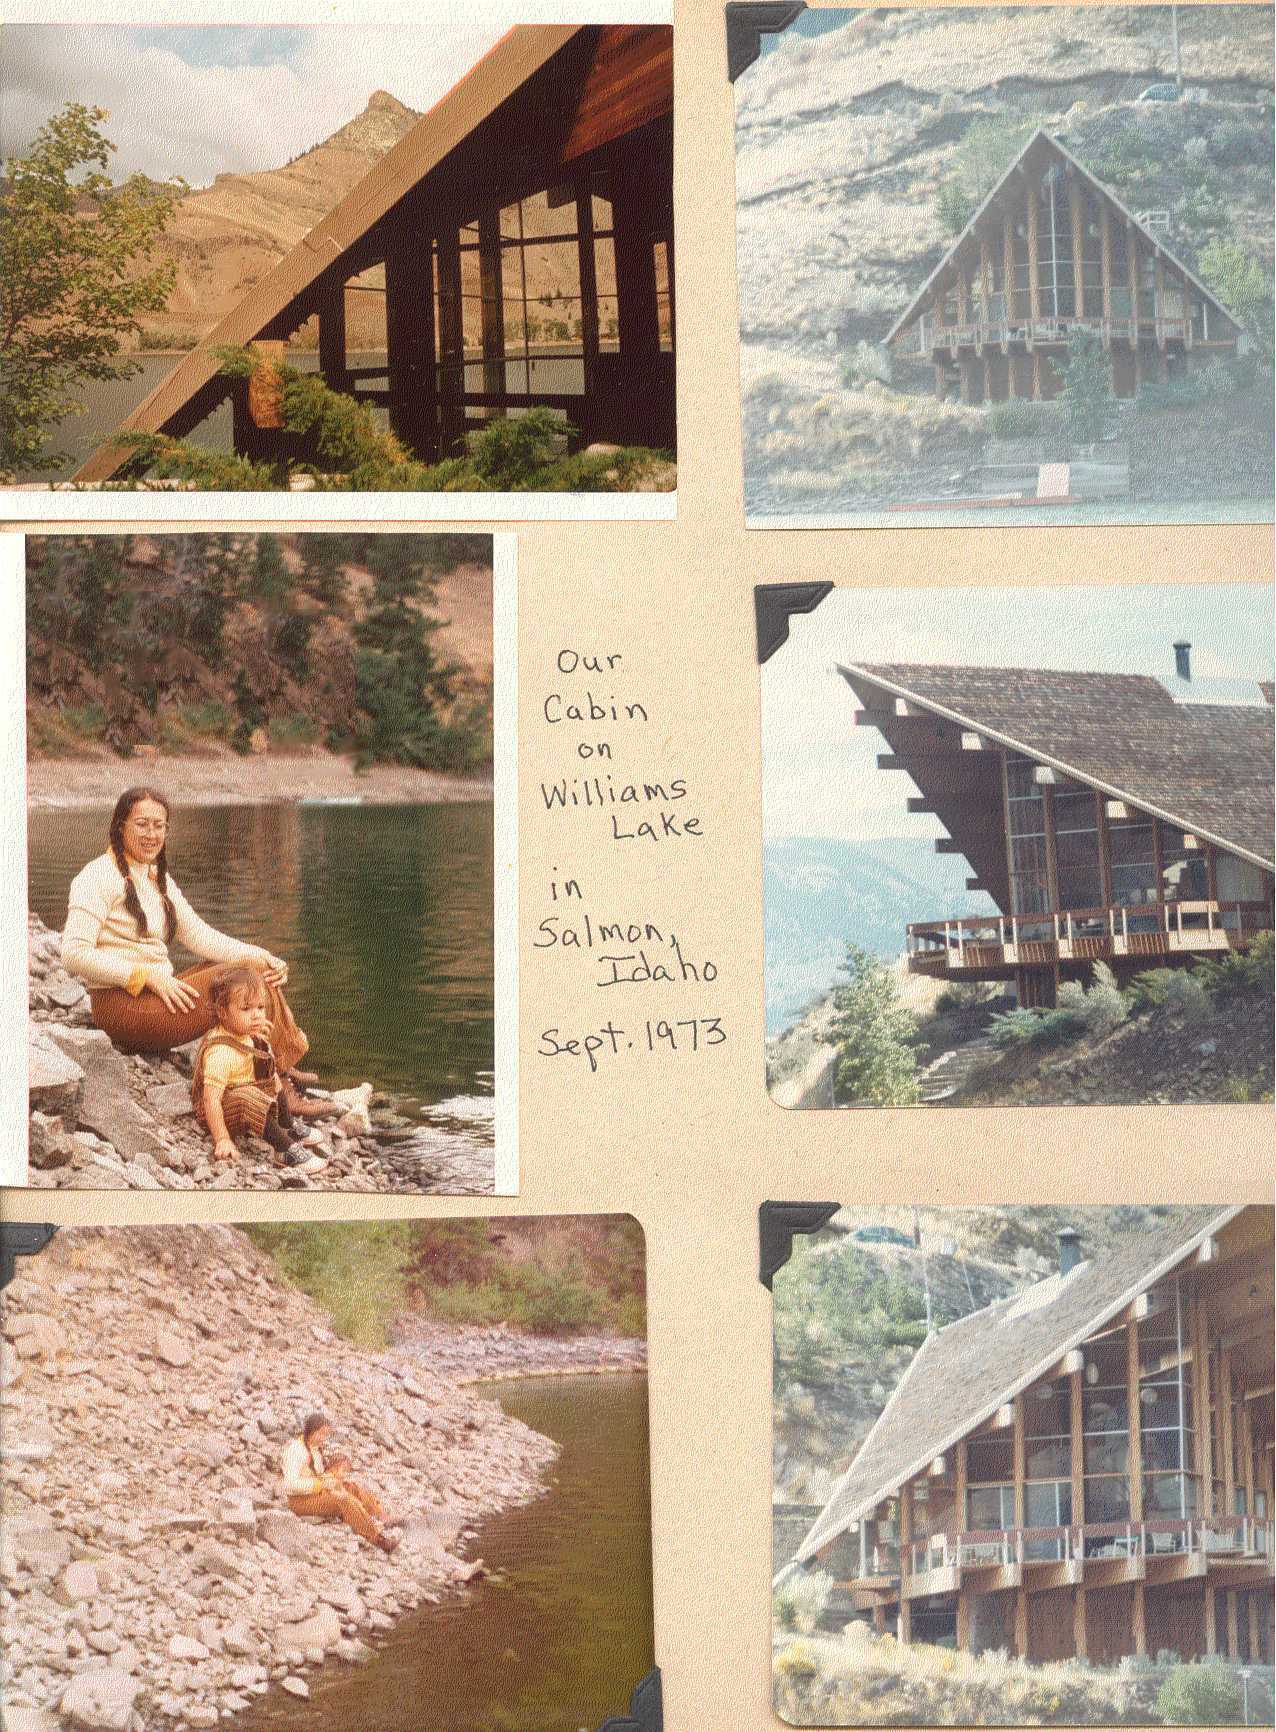 Cabin on Williams Lake in Salmon, Idaho - September 1973